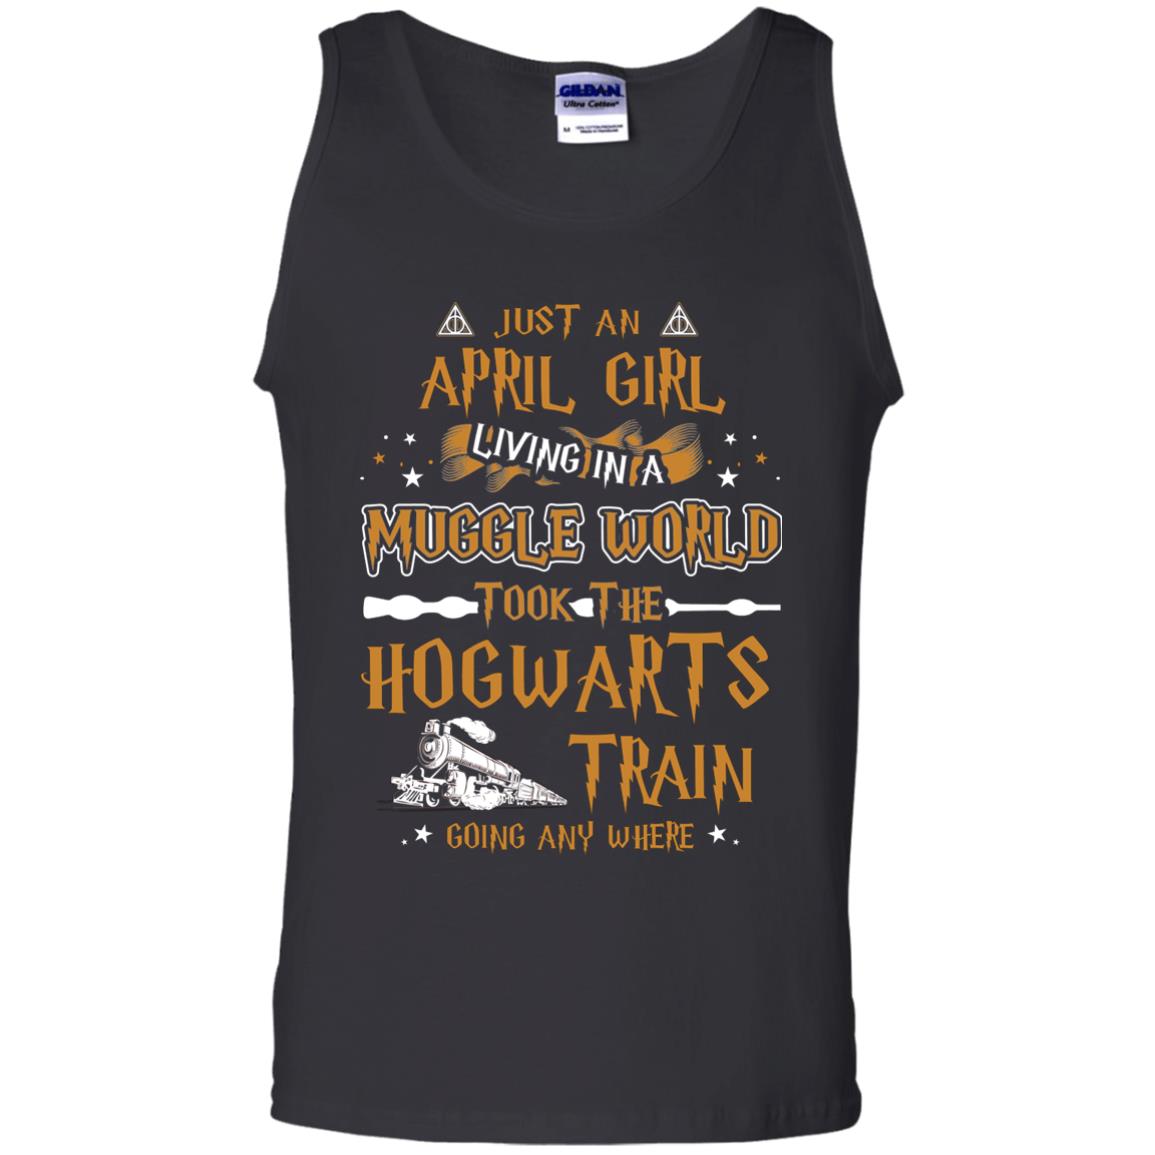 Just An April Girl Living In A Muggle World Took The Hogwarts Train Going Any WhereG220 Gildan 100% Cotton Tank Top